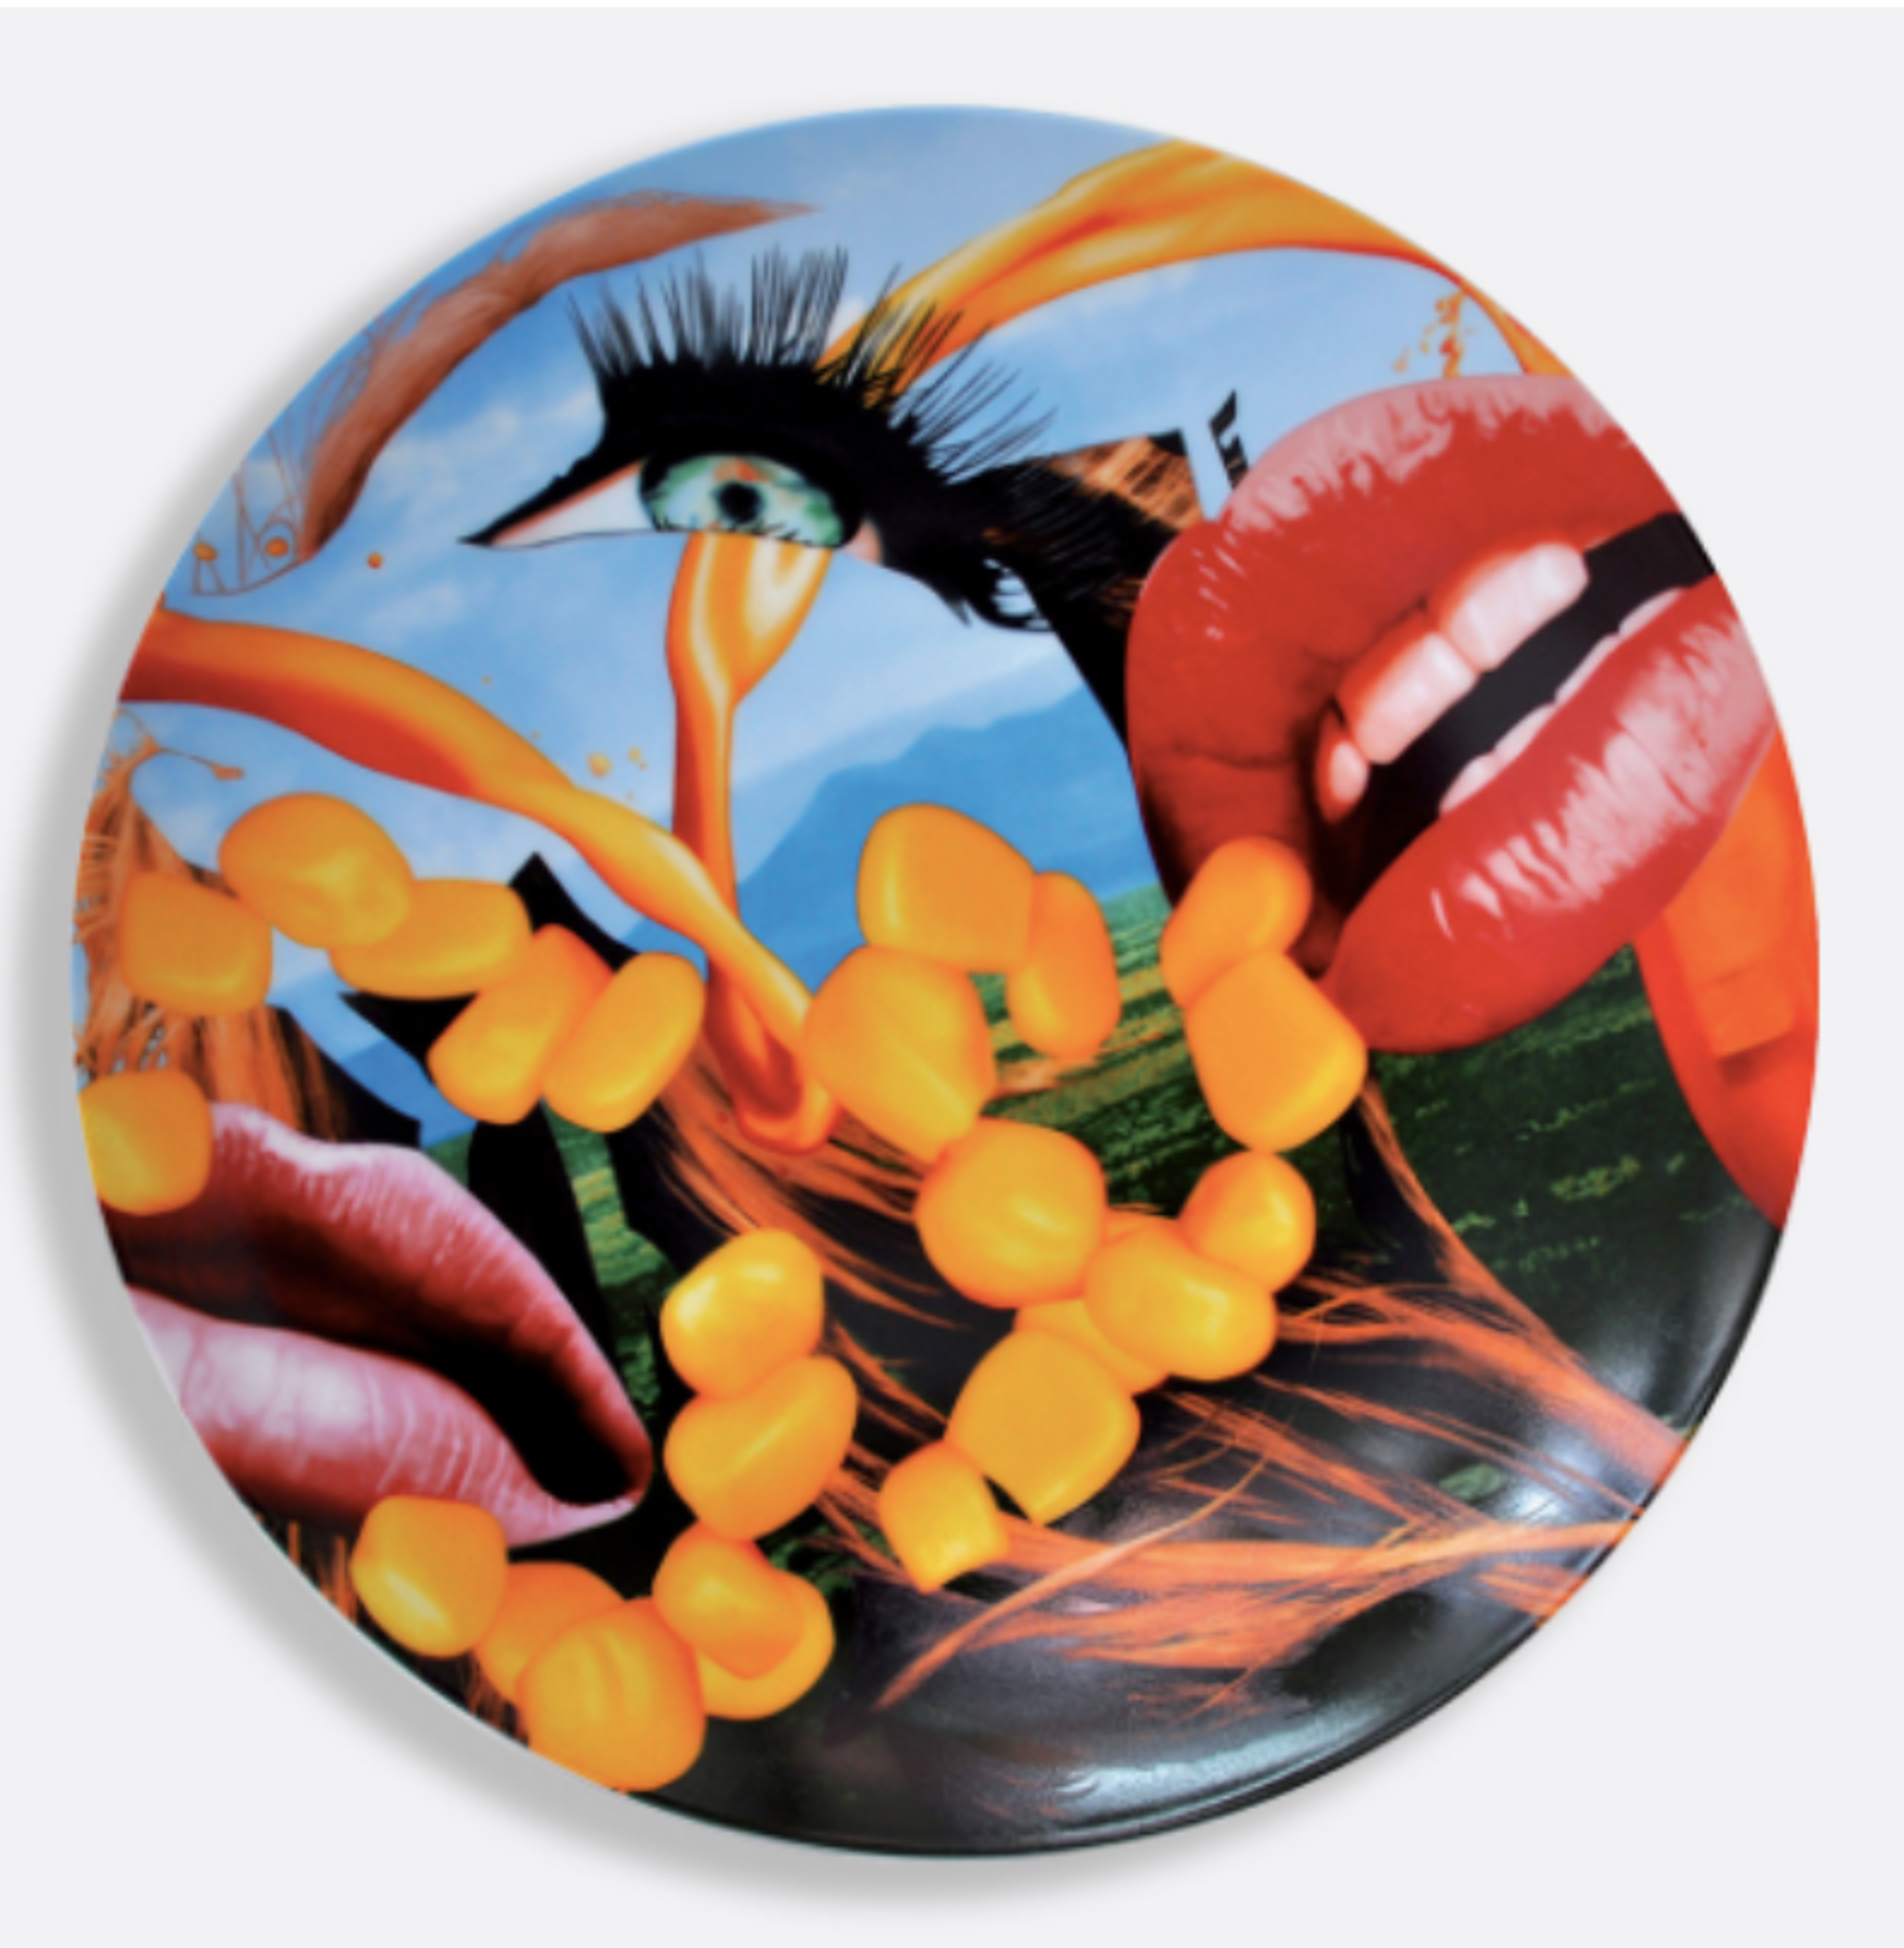 Lips - Coupe service plate by Jeff Koons x Bernardaud